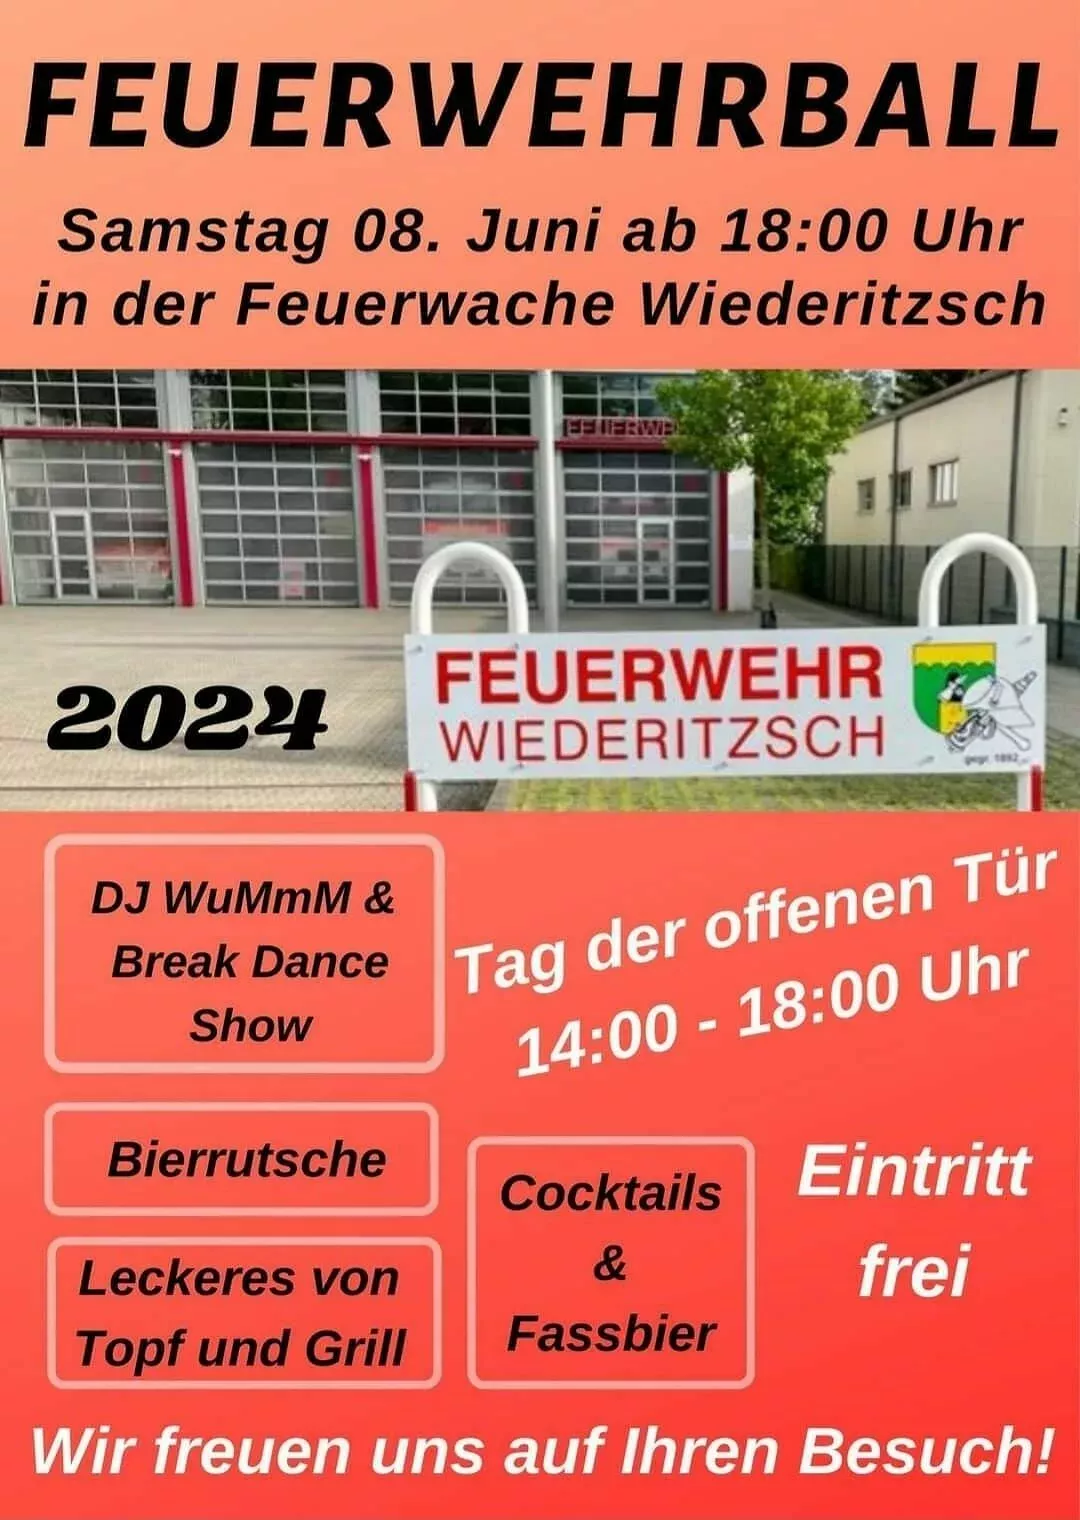 Feuerwehrball Wiederitzsch 2024